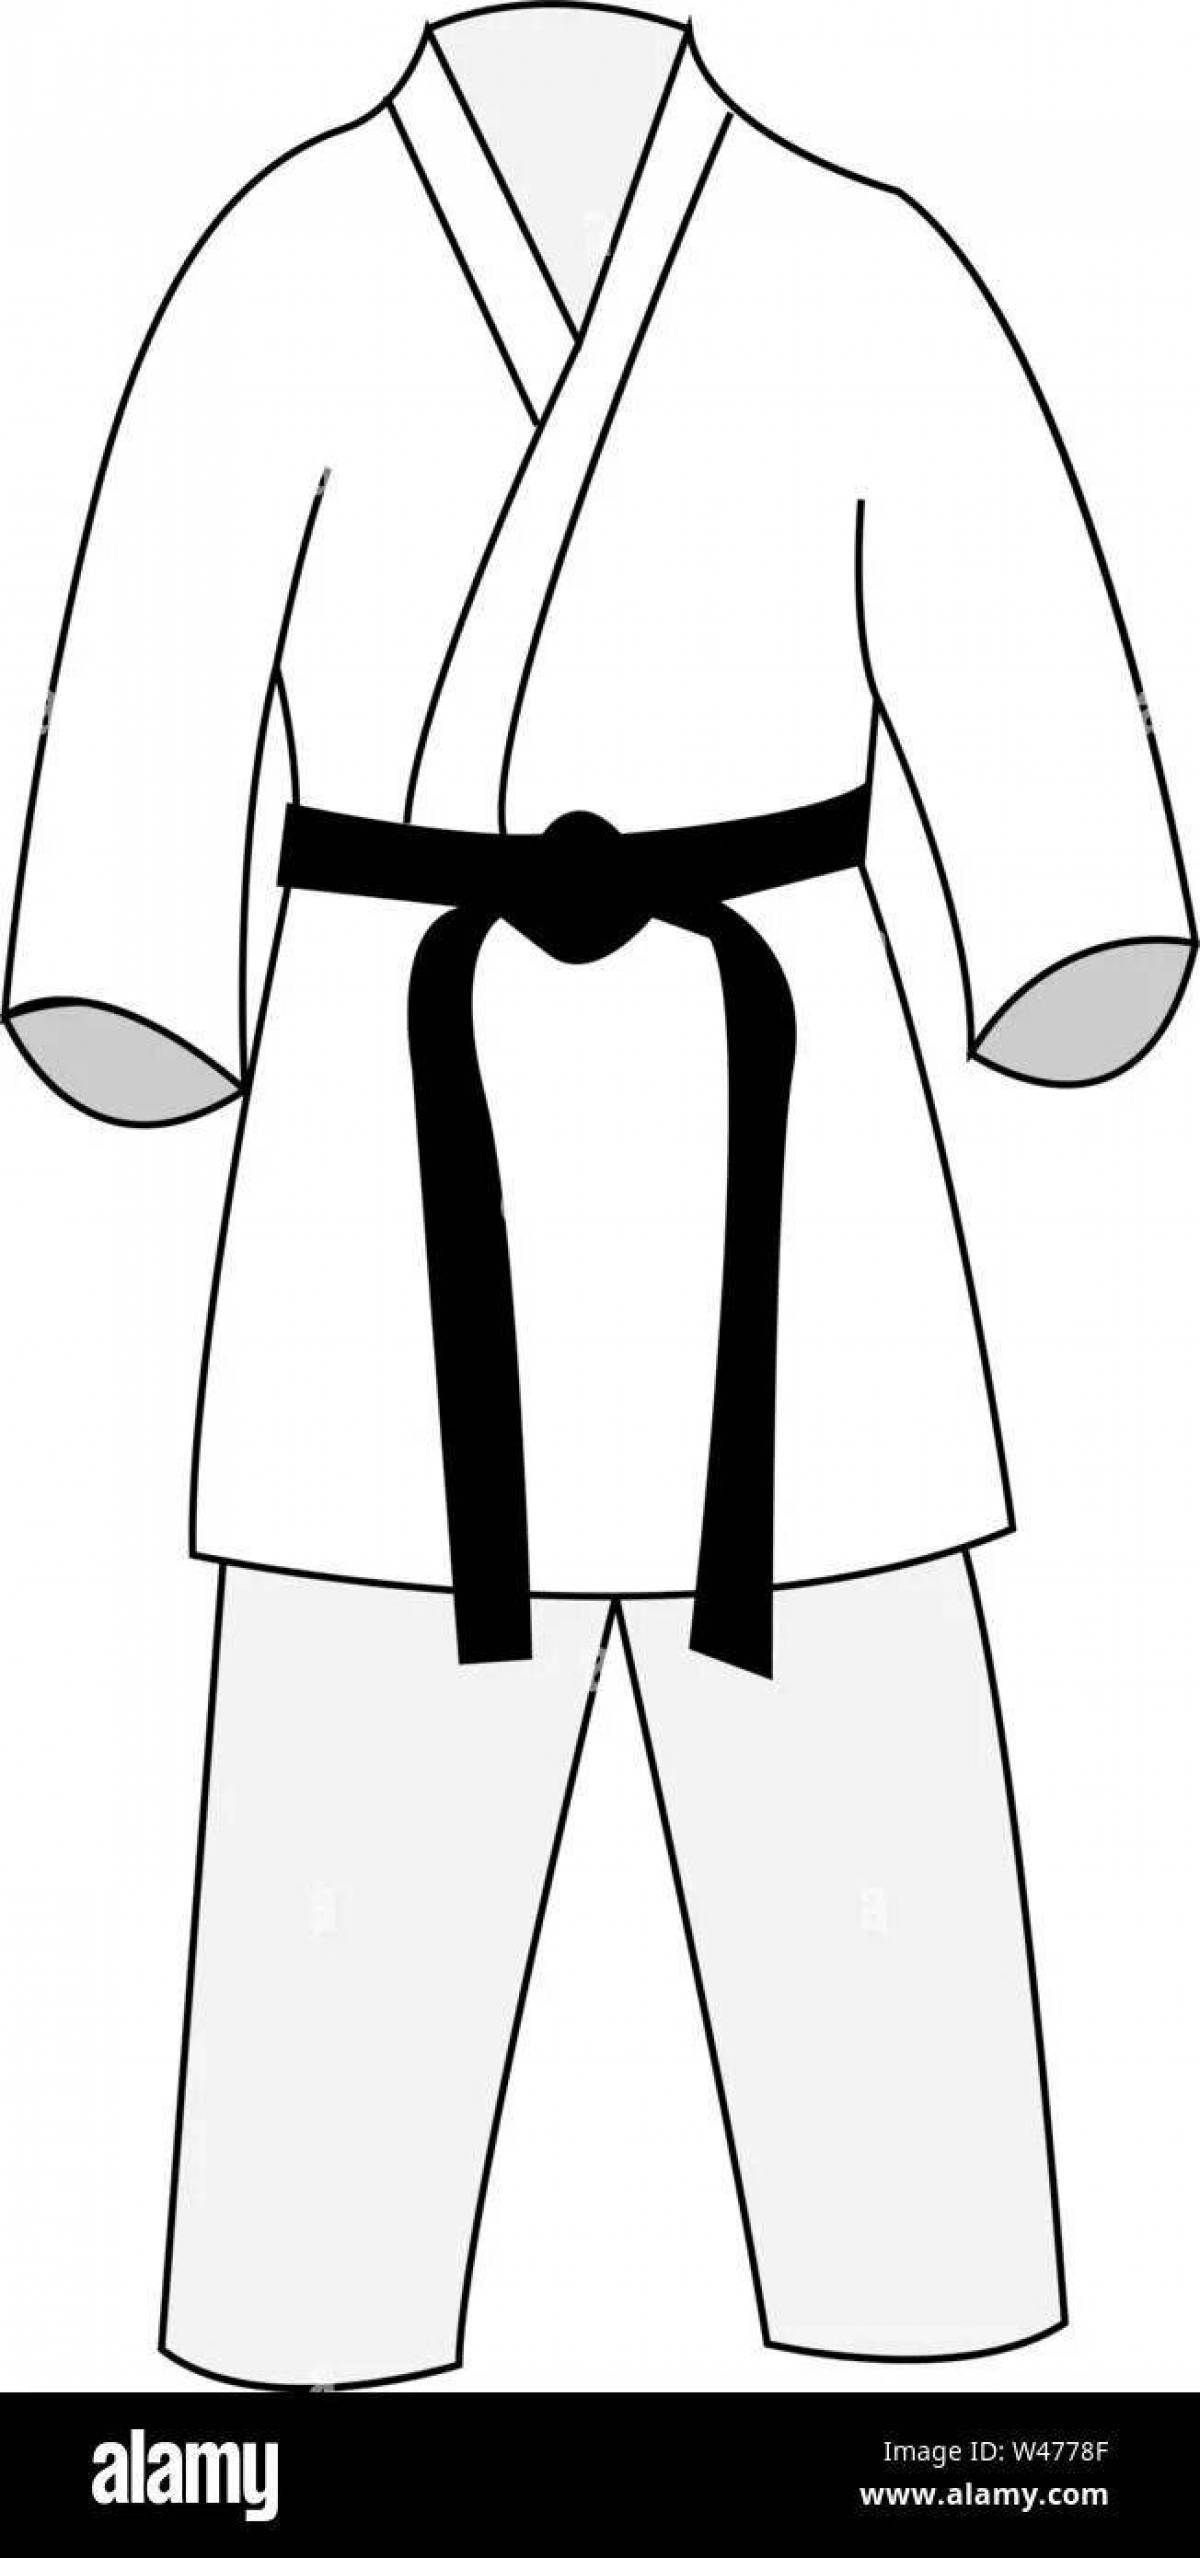 Coloring page stylish judo kimono